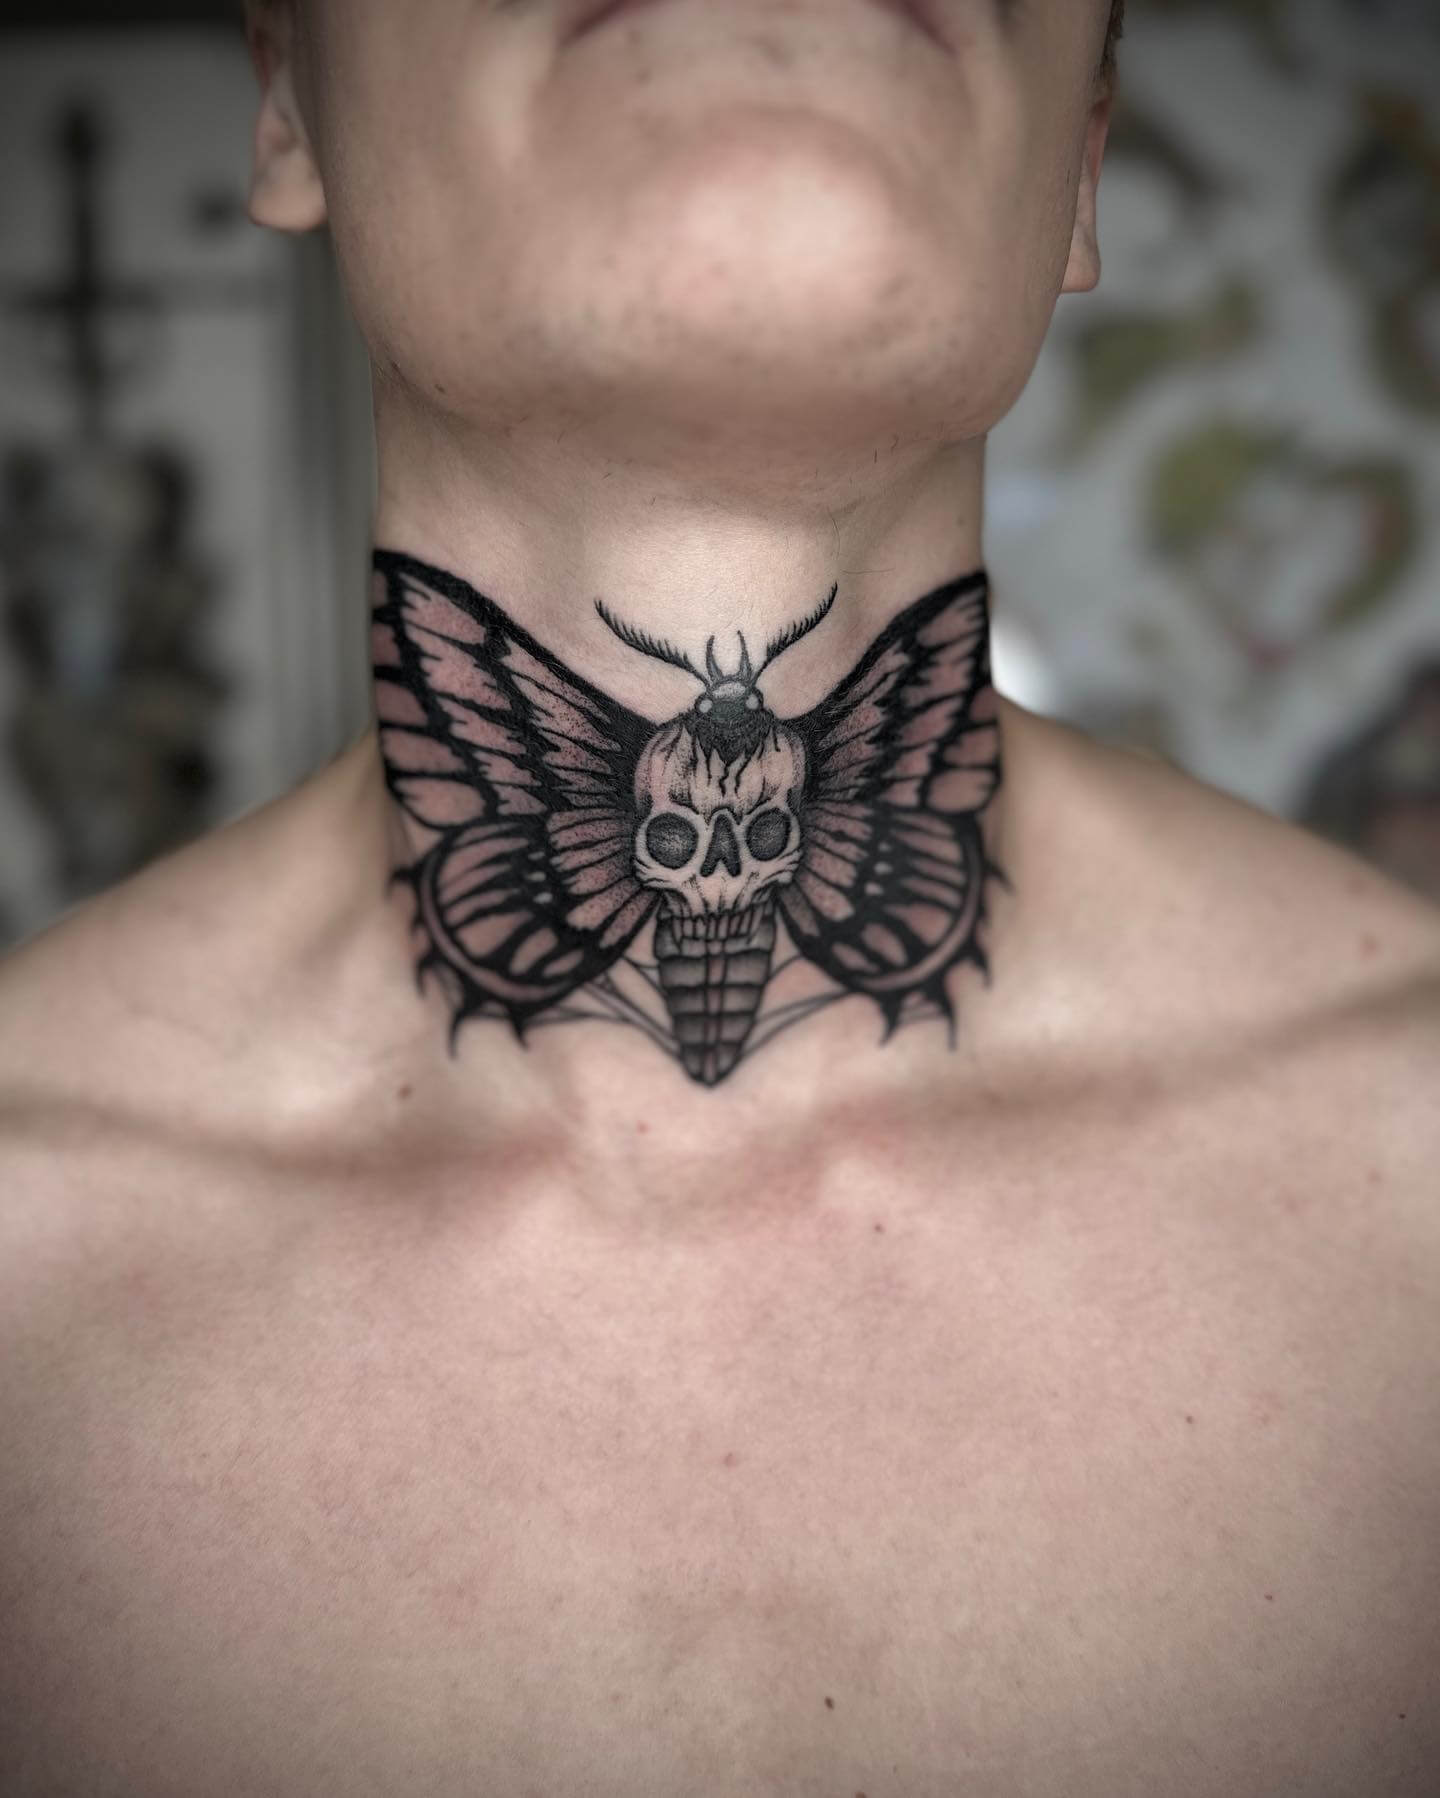 Amzaing Butterfly skull neck tattoo